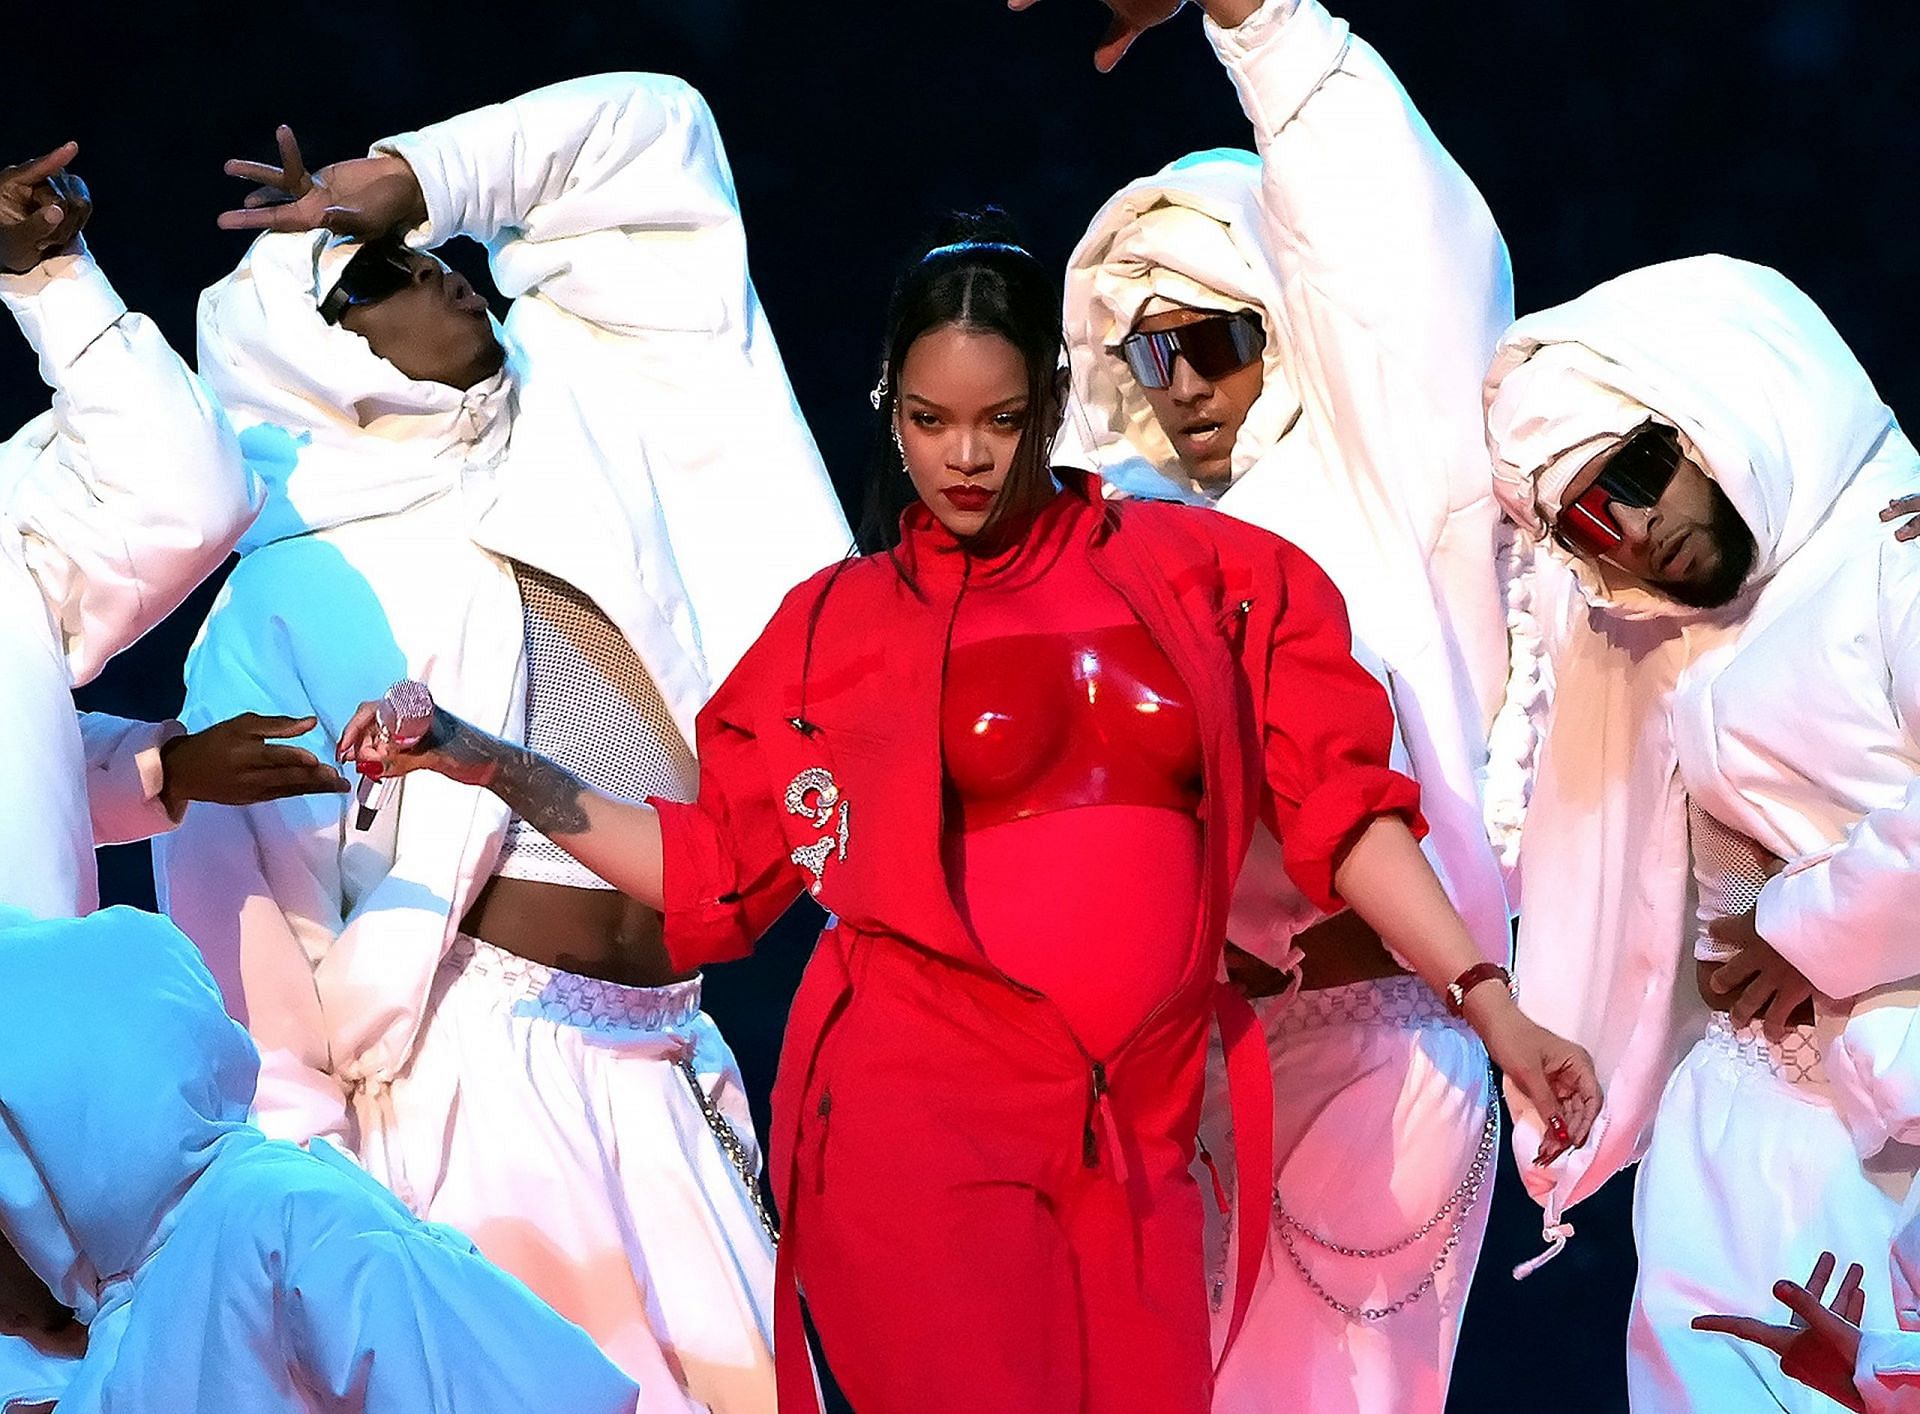 Rihanna Did Rihanna lipsync during the Super Bowl halftime show? How